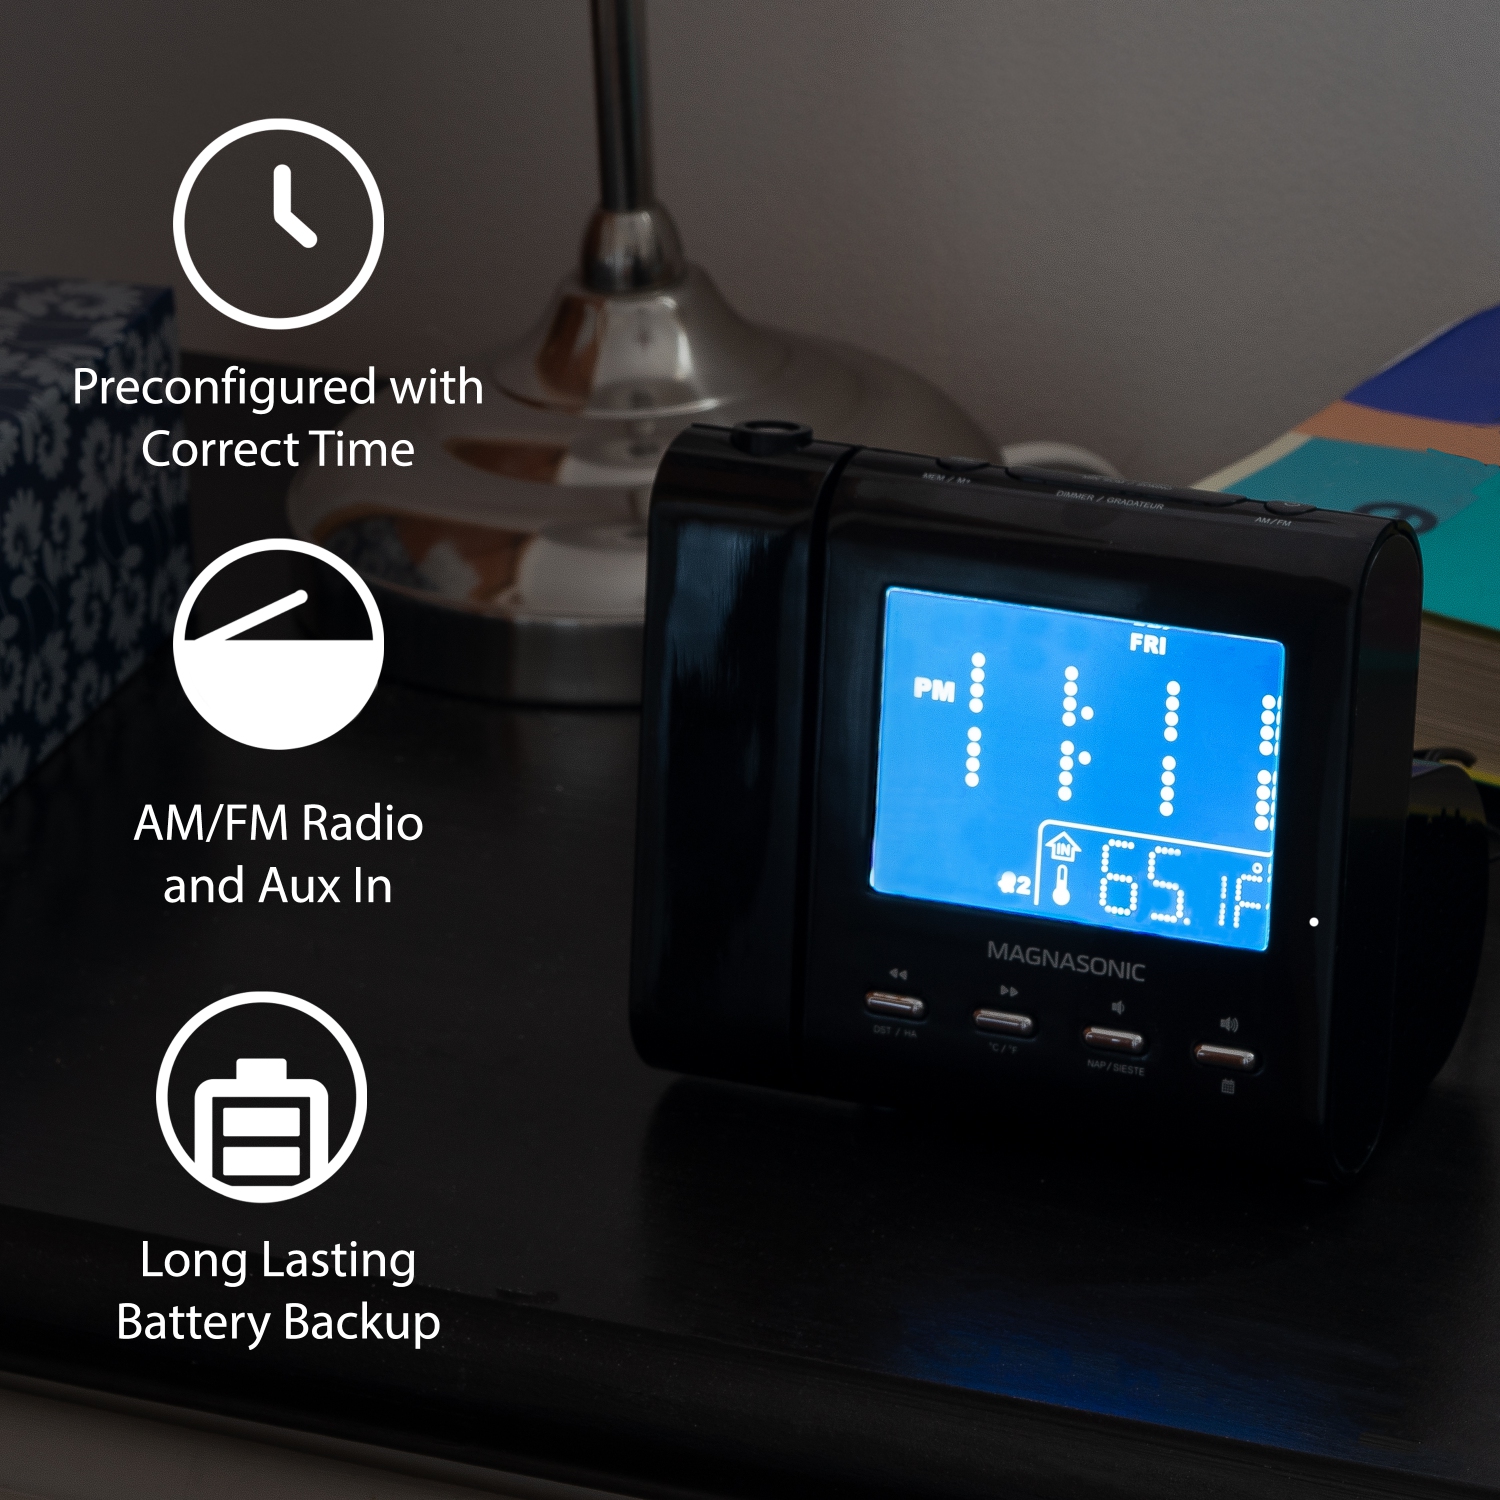 Magnasonic Projection Alarm Clock with AM/FM Radio, Battery Backup